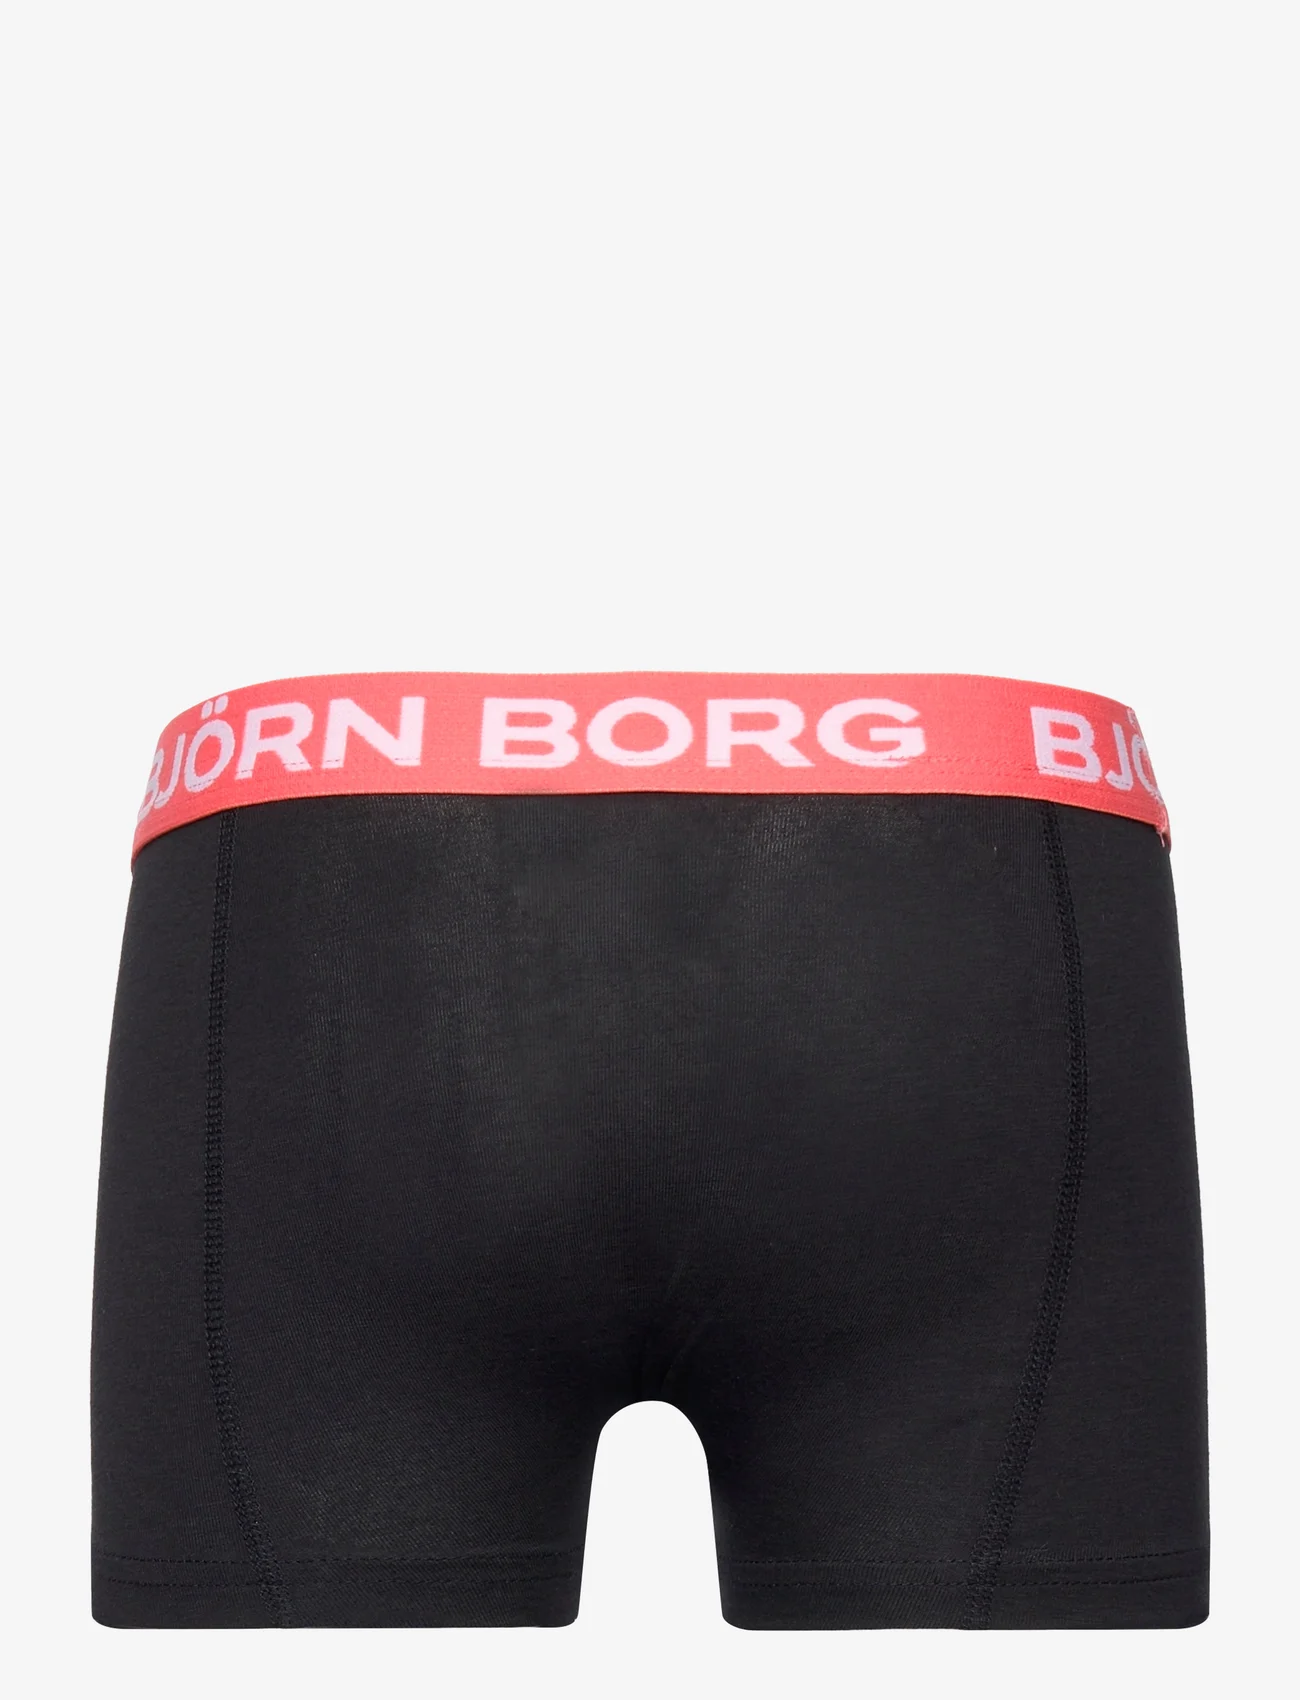 Björn Borg - CORE BOXER 3p - underpants - multipack 6 - 1